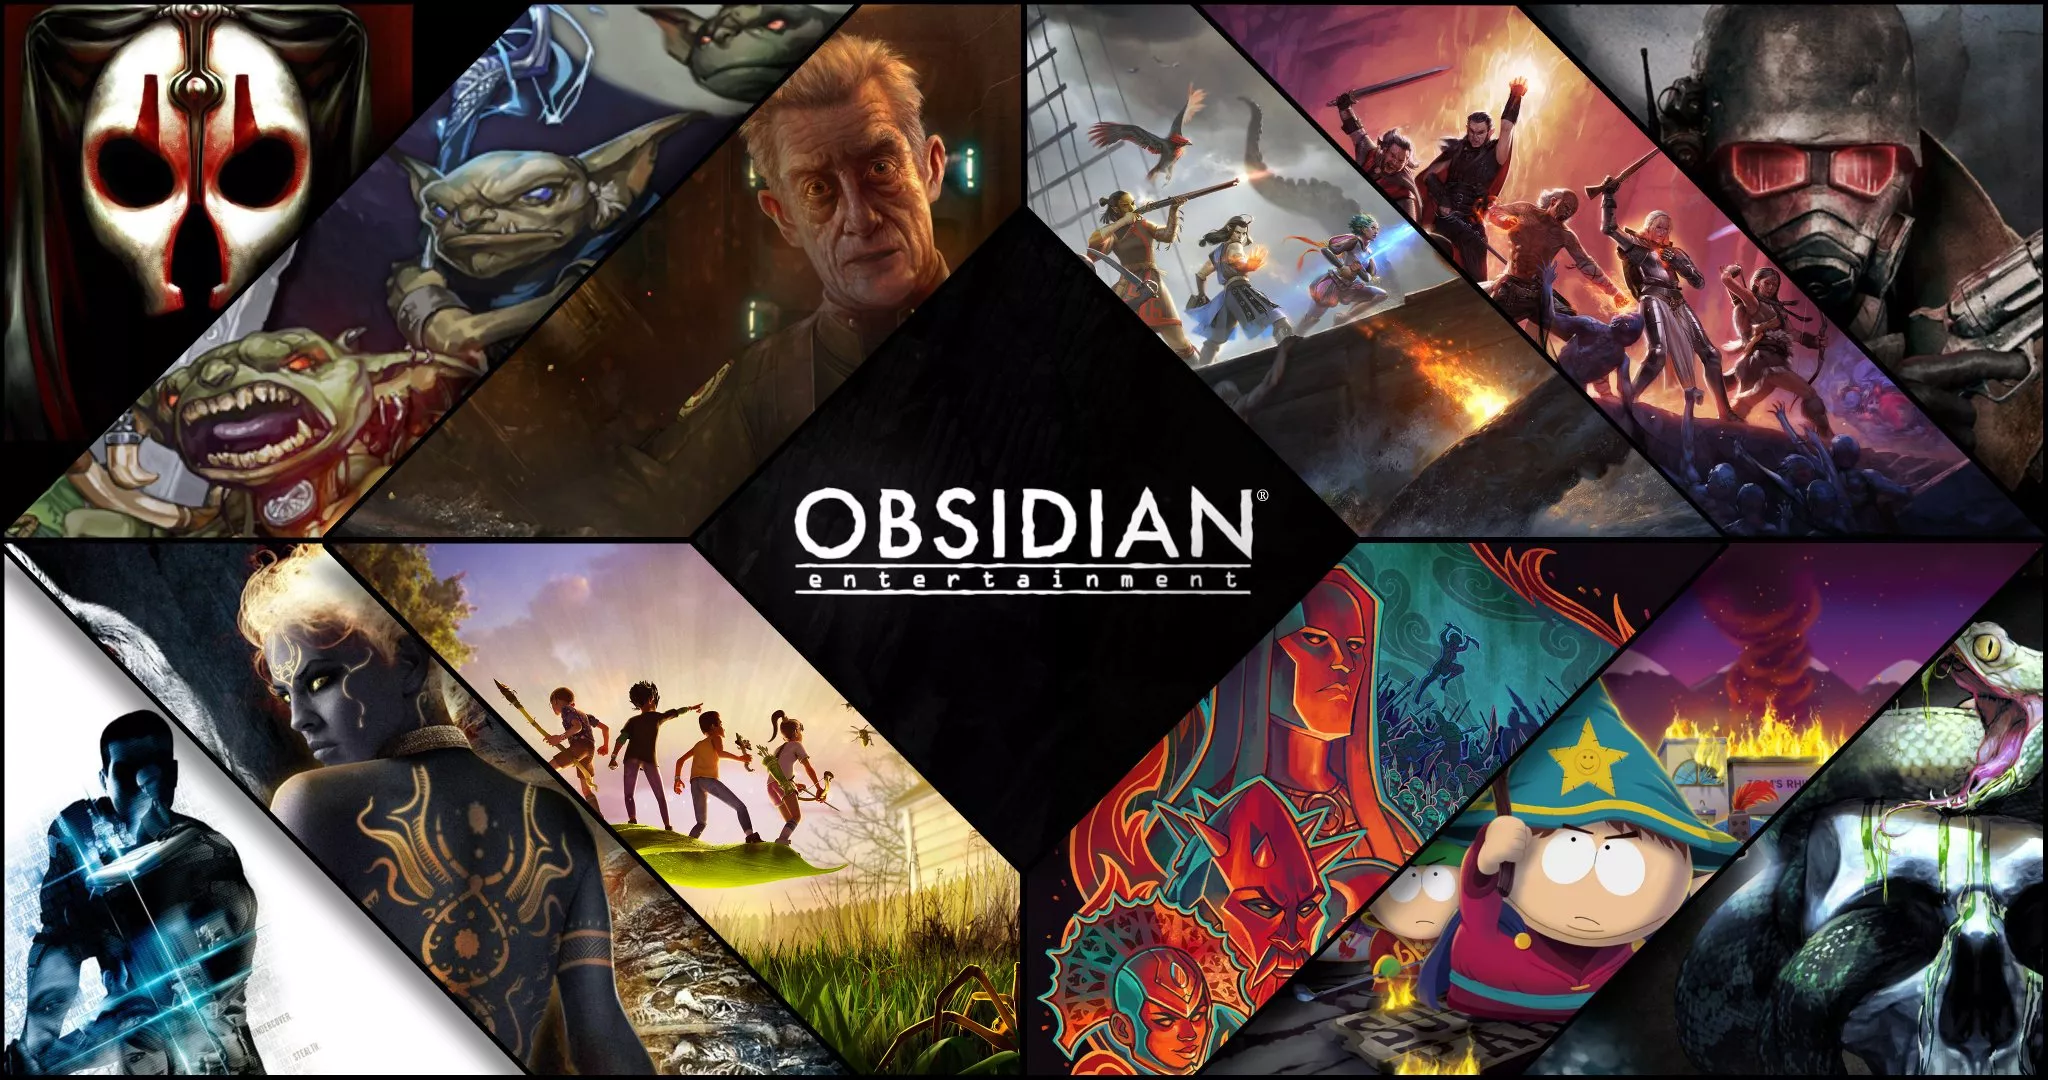 Obsidian Entertainment: Gameplay Animatorin von God of War Ragnarök eingestellt Heropic